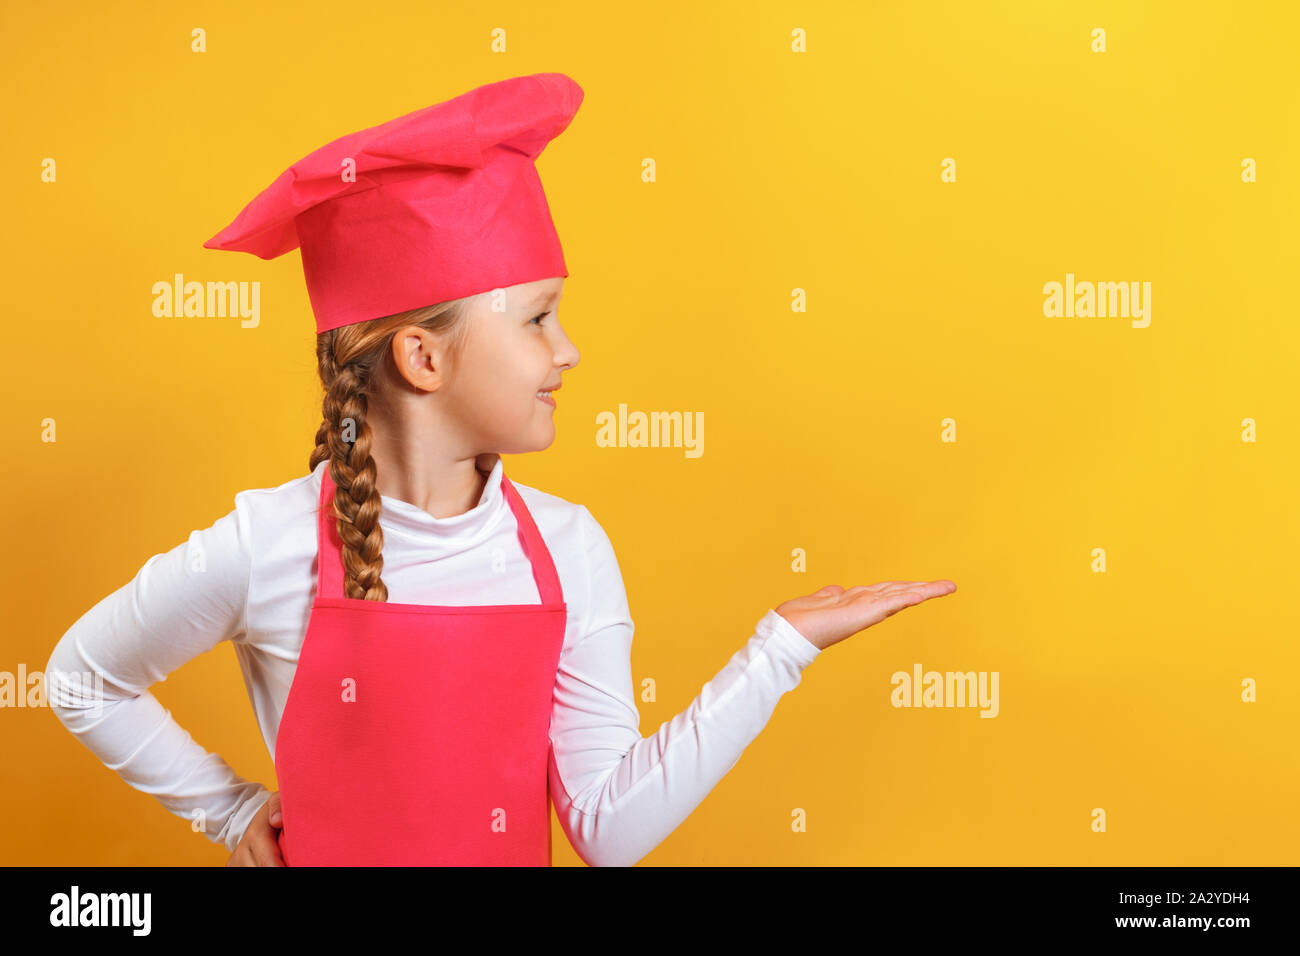 Little Chef” restaurant sign Stock Photo - Alamy